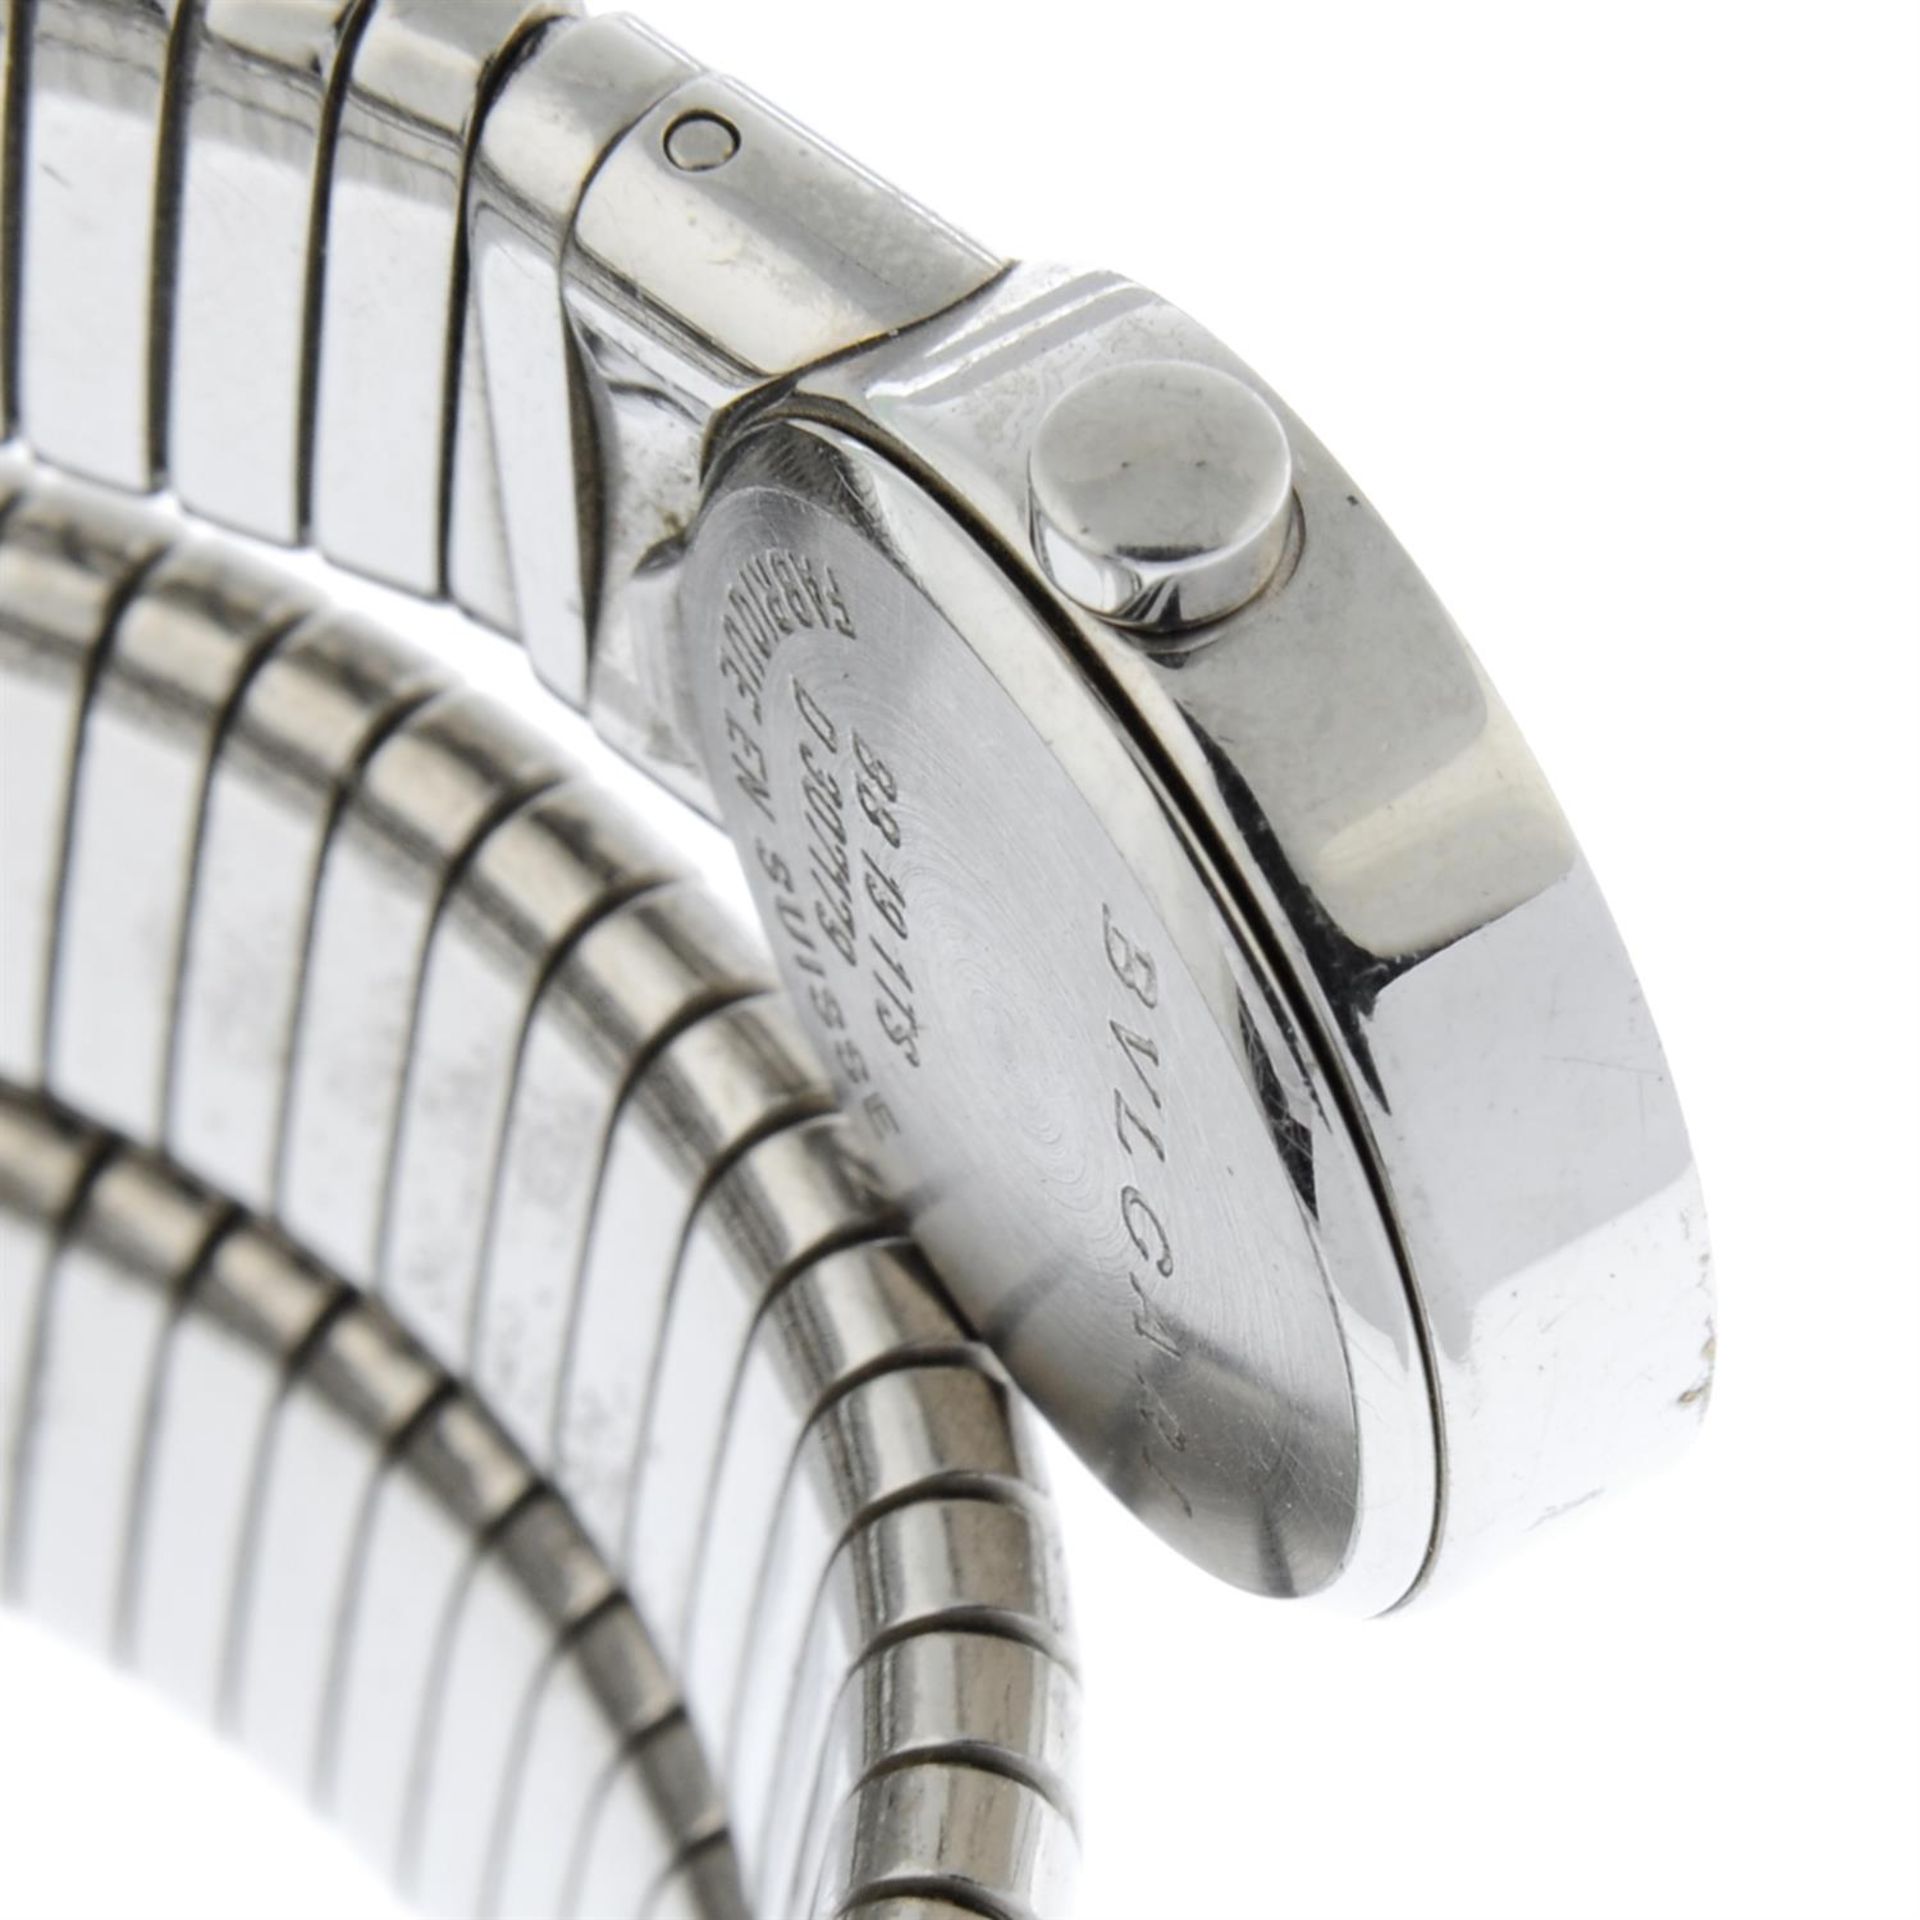 BULGARI - a stainless steel Serpenti bracelet watch, 19mm. - Image 4 of 5